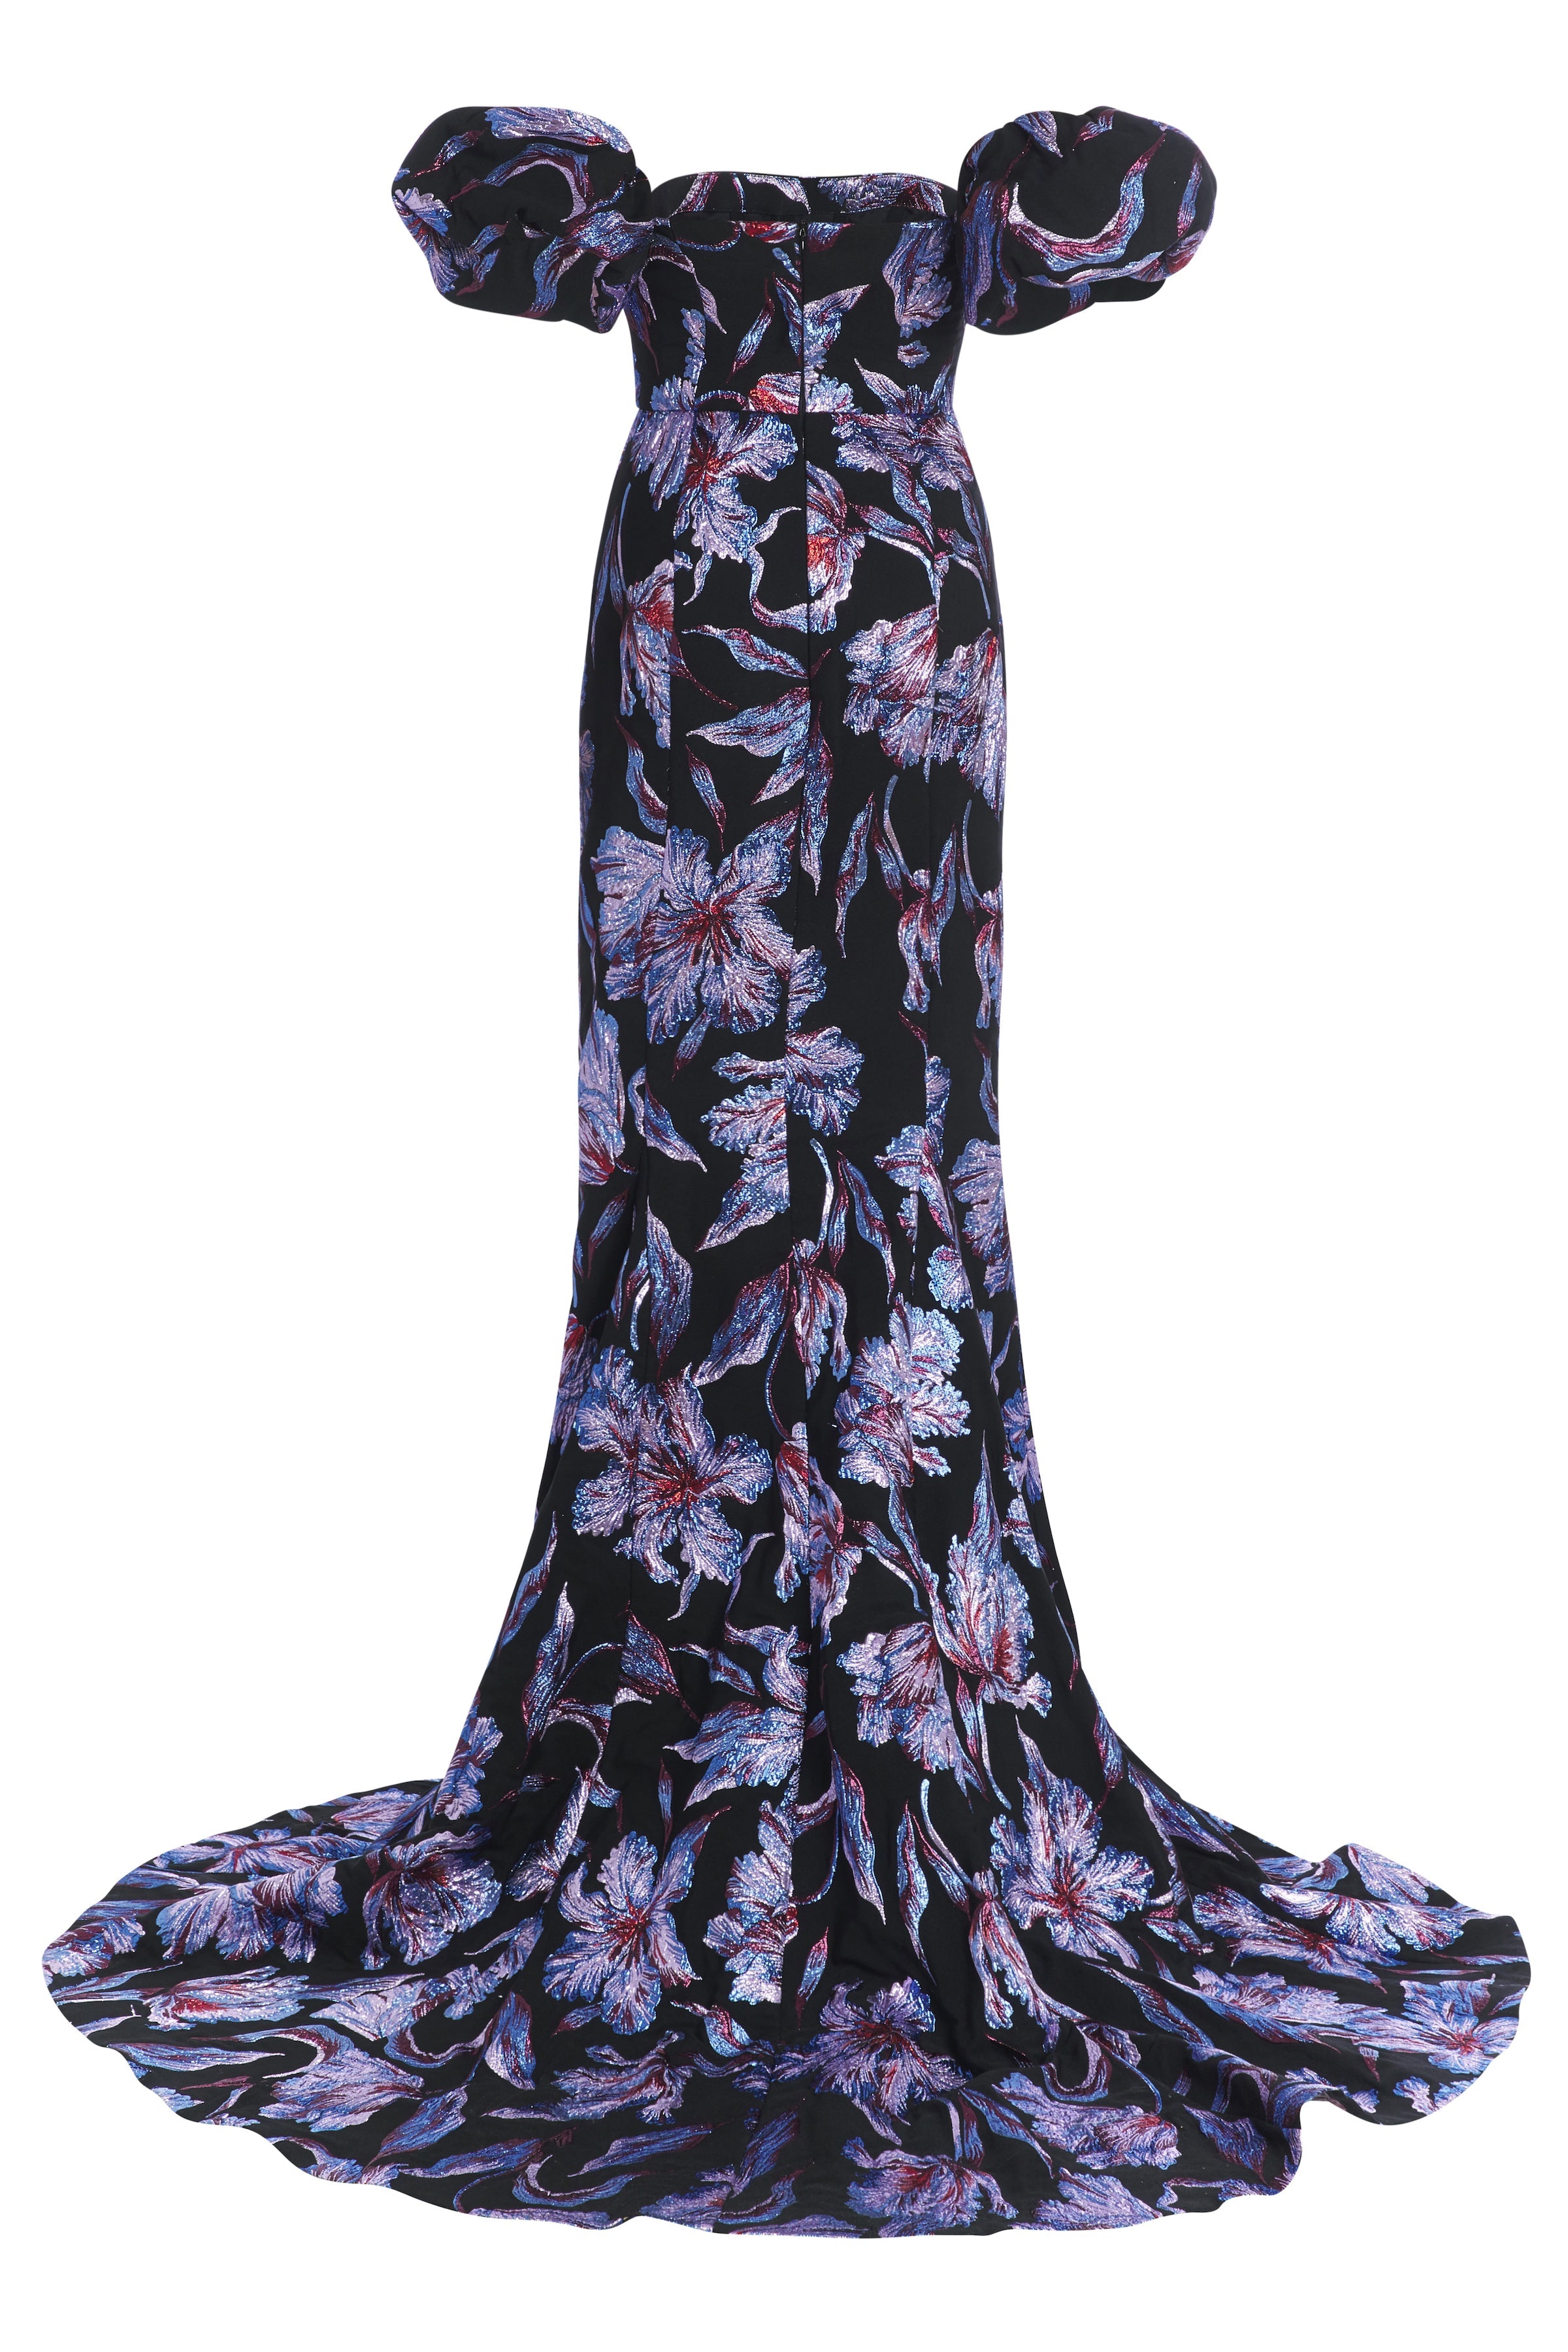 FINAL SALE: Astaire Metallic Brocade Strapless gown